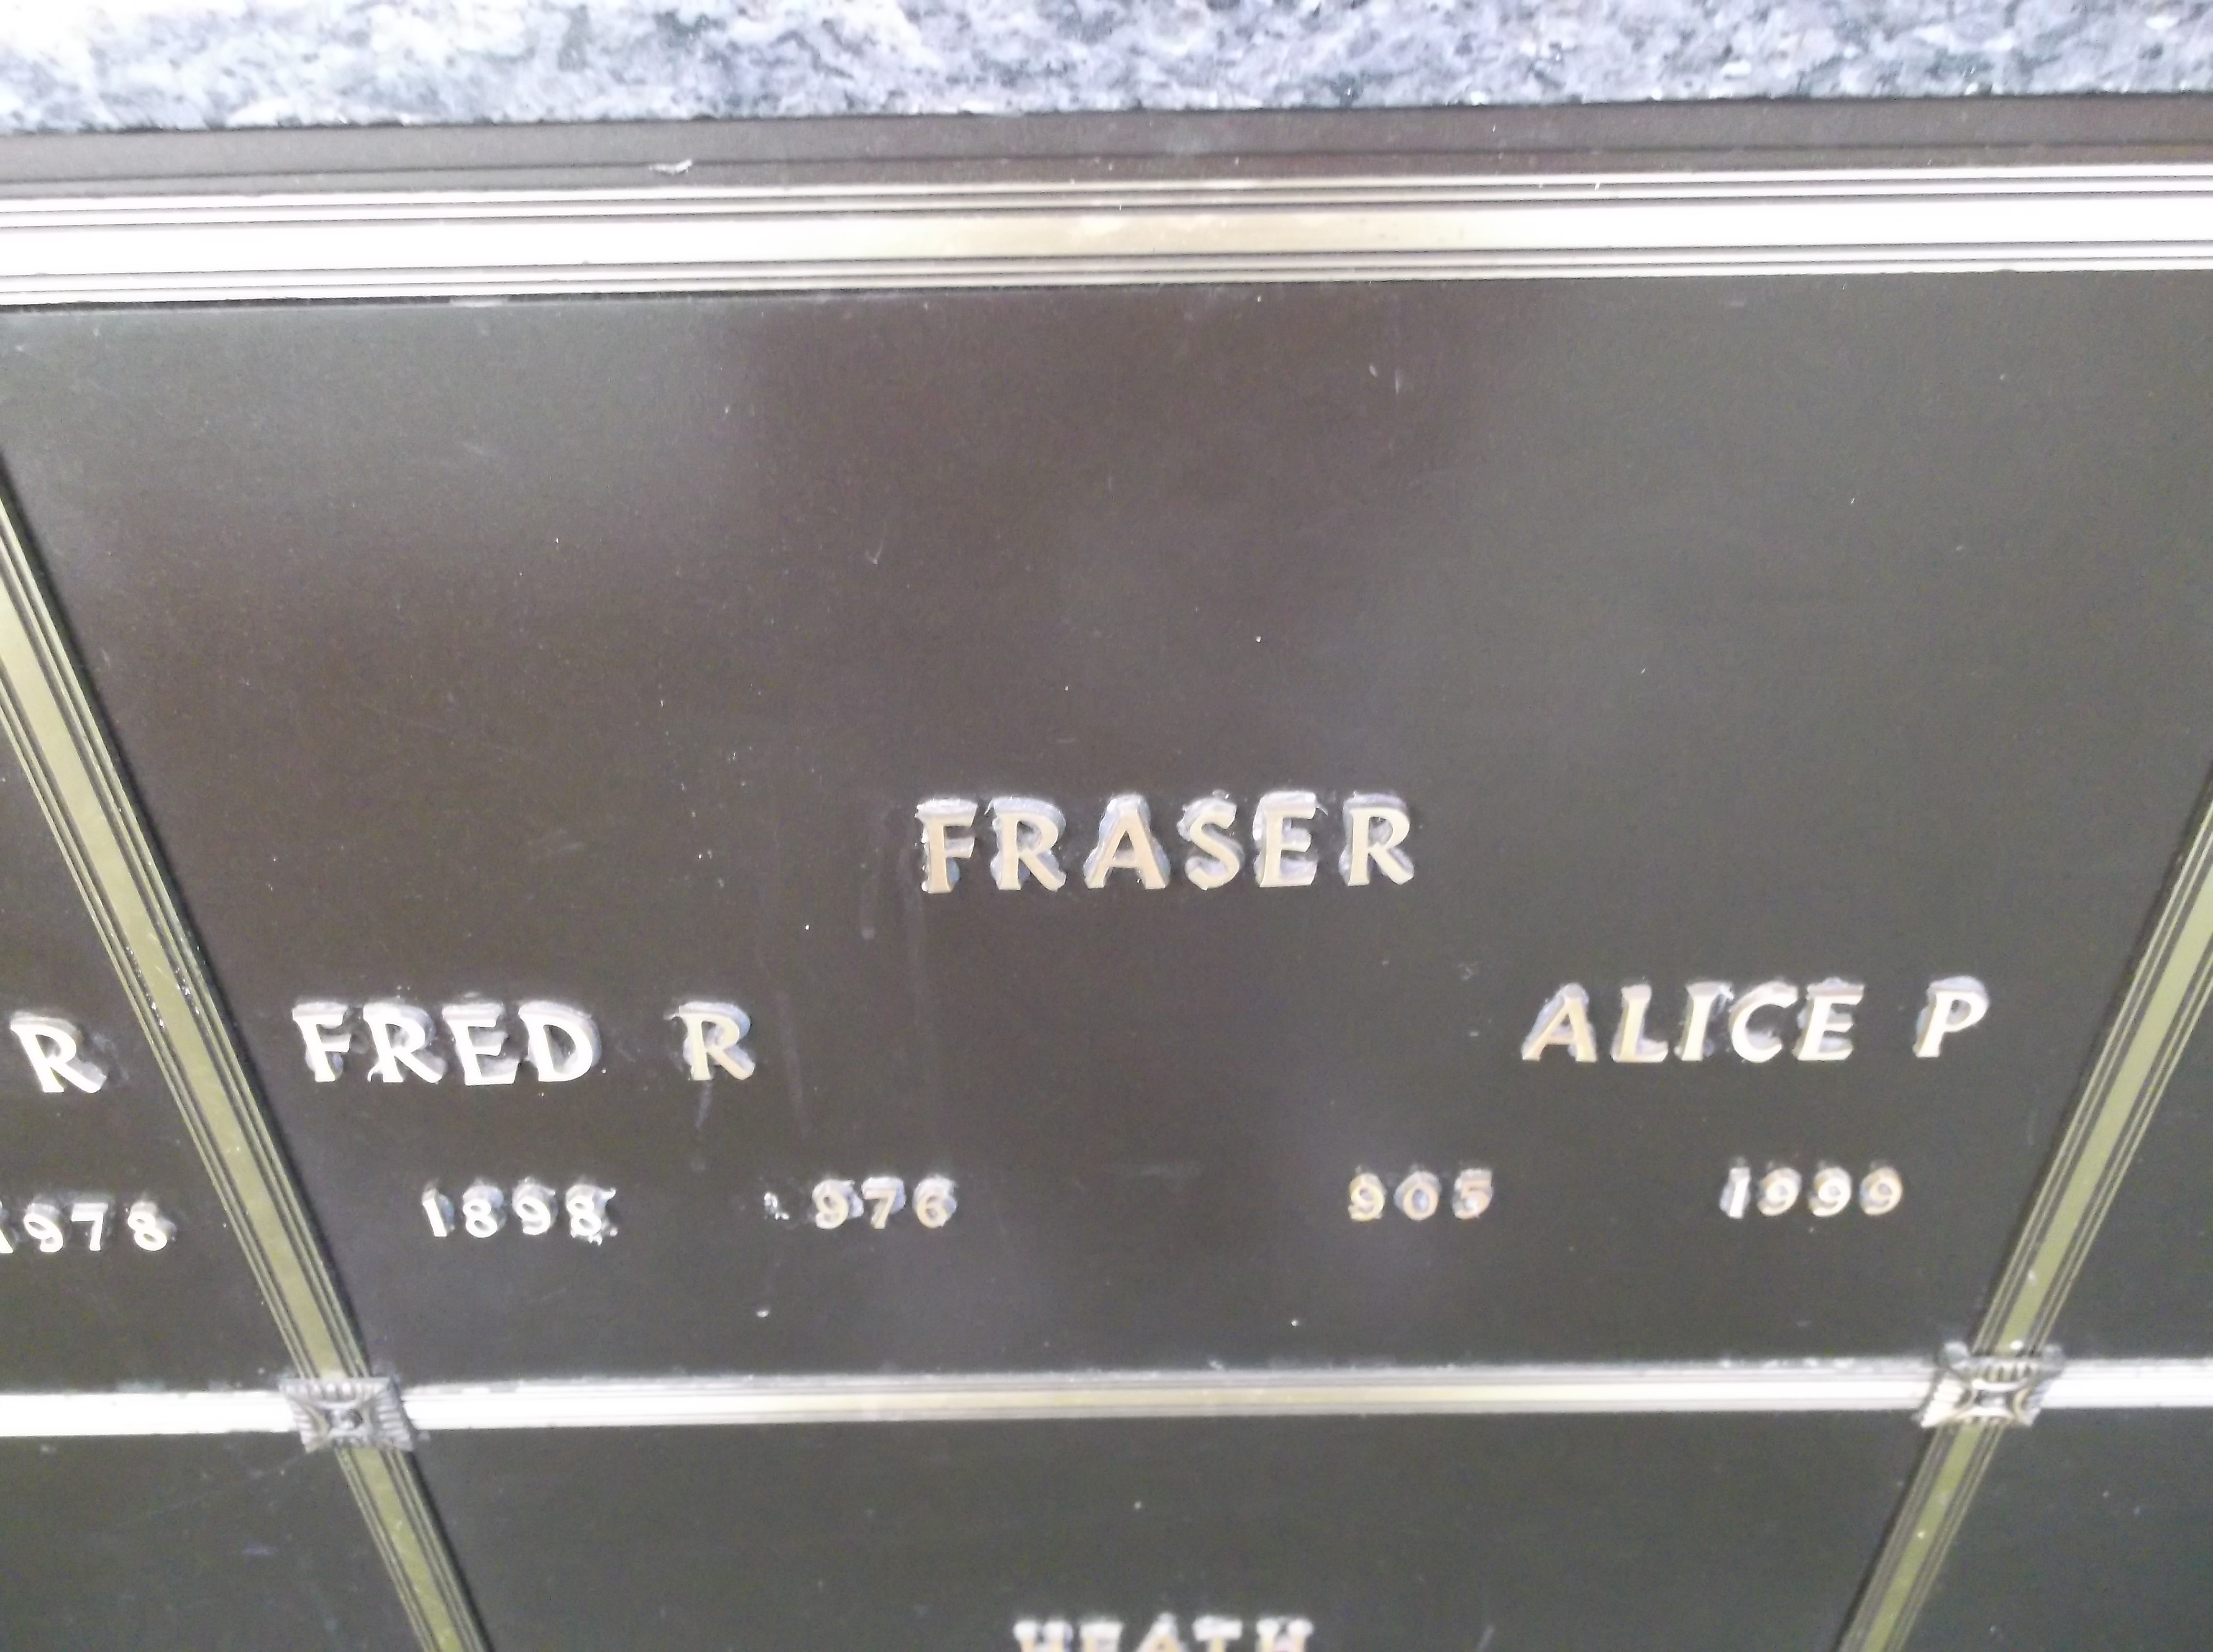 Alice P Fraser